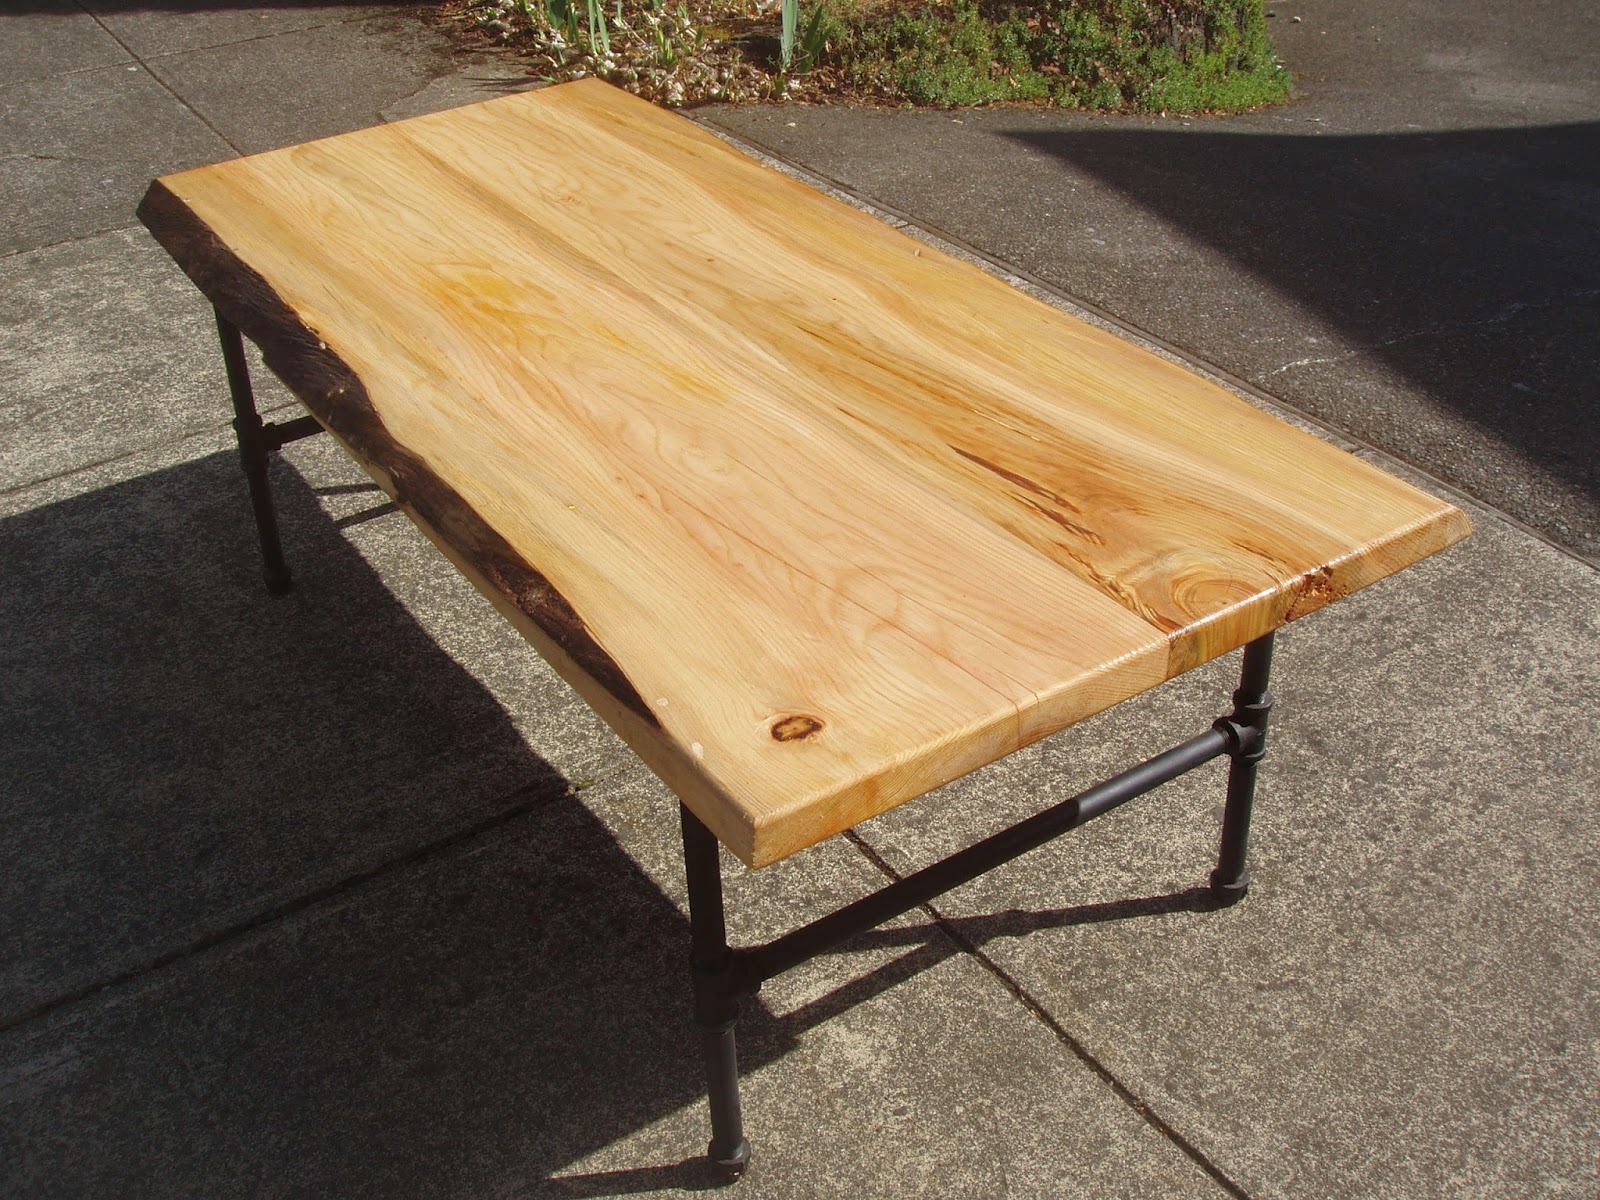 driftedge woodworking: Live Edge Cedar Coffee Table with ...